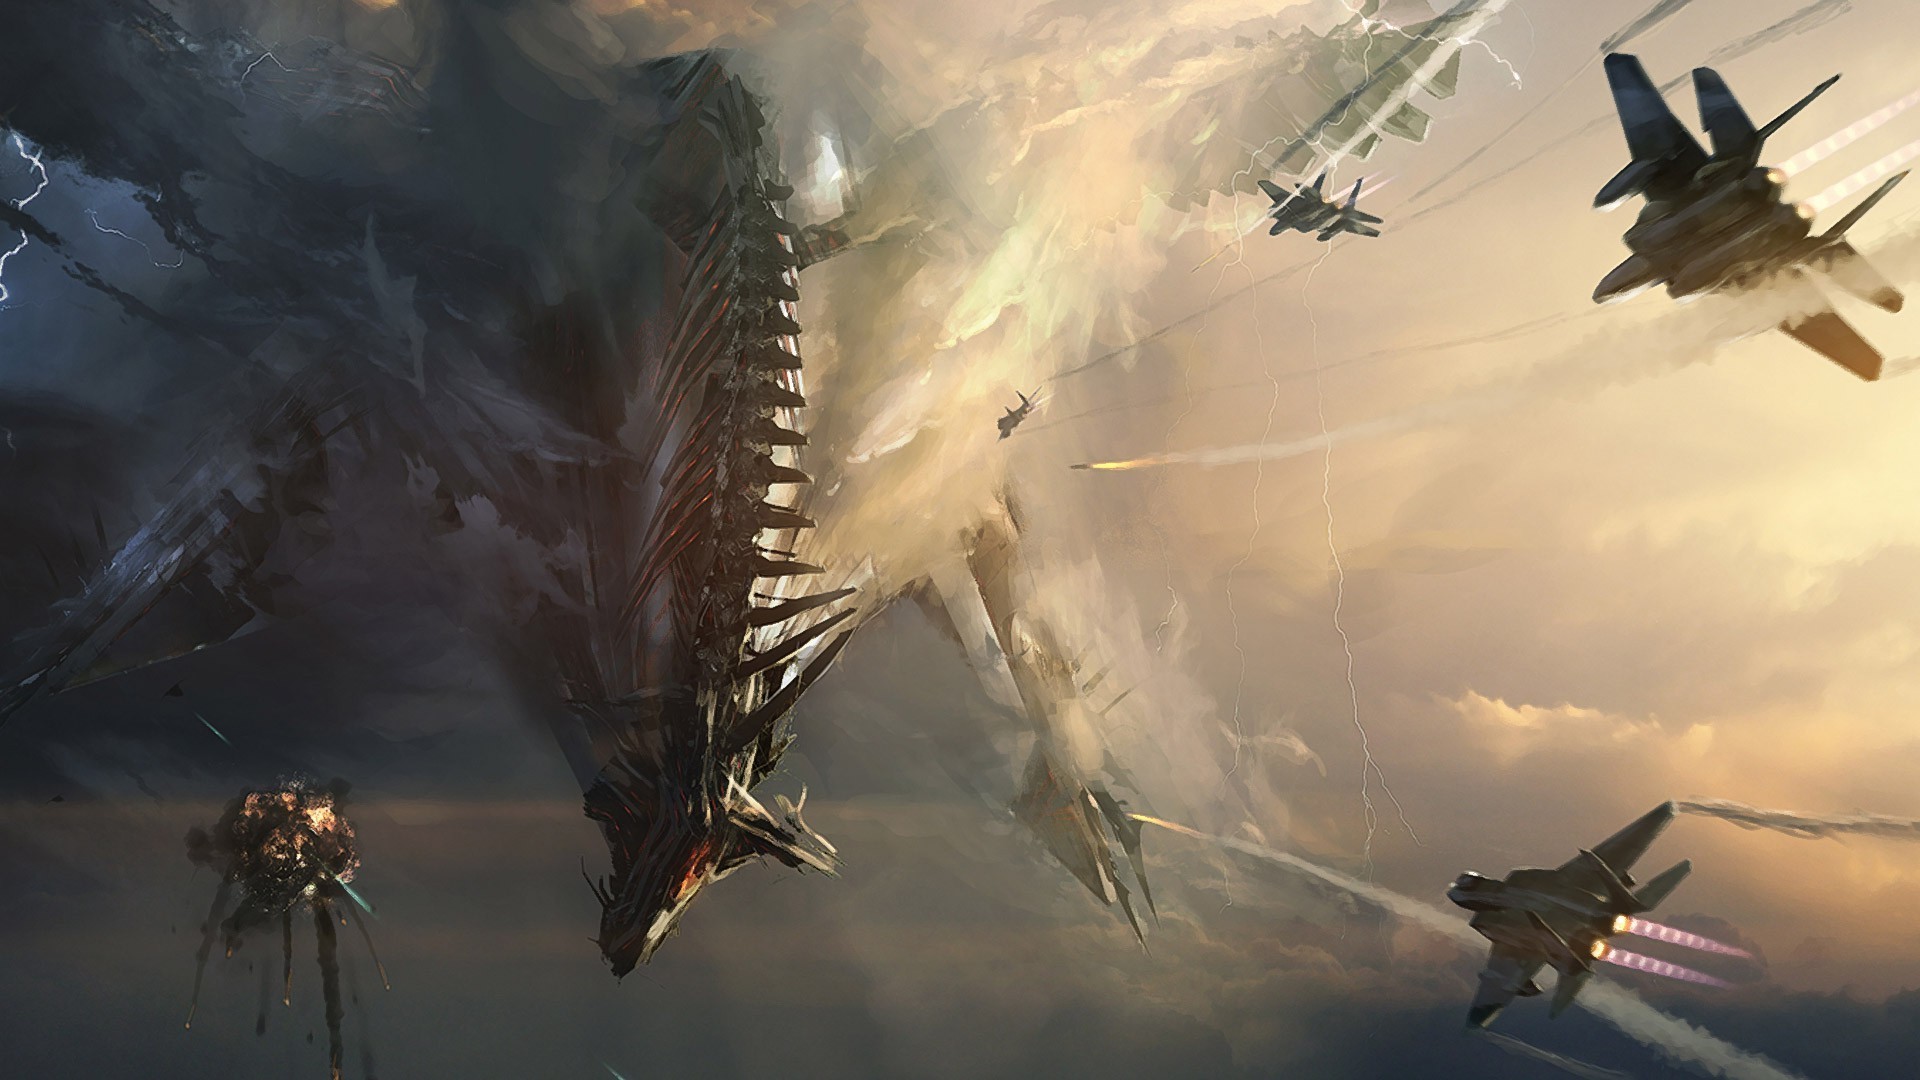 General 1920x1080 artwork fantasy art dragon jets war sky battle creature military military aircraft aircraft vehicle military vehicle